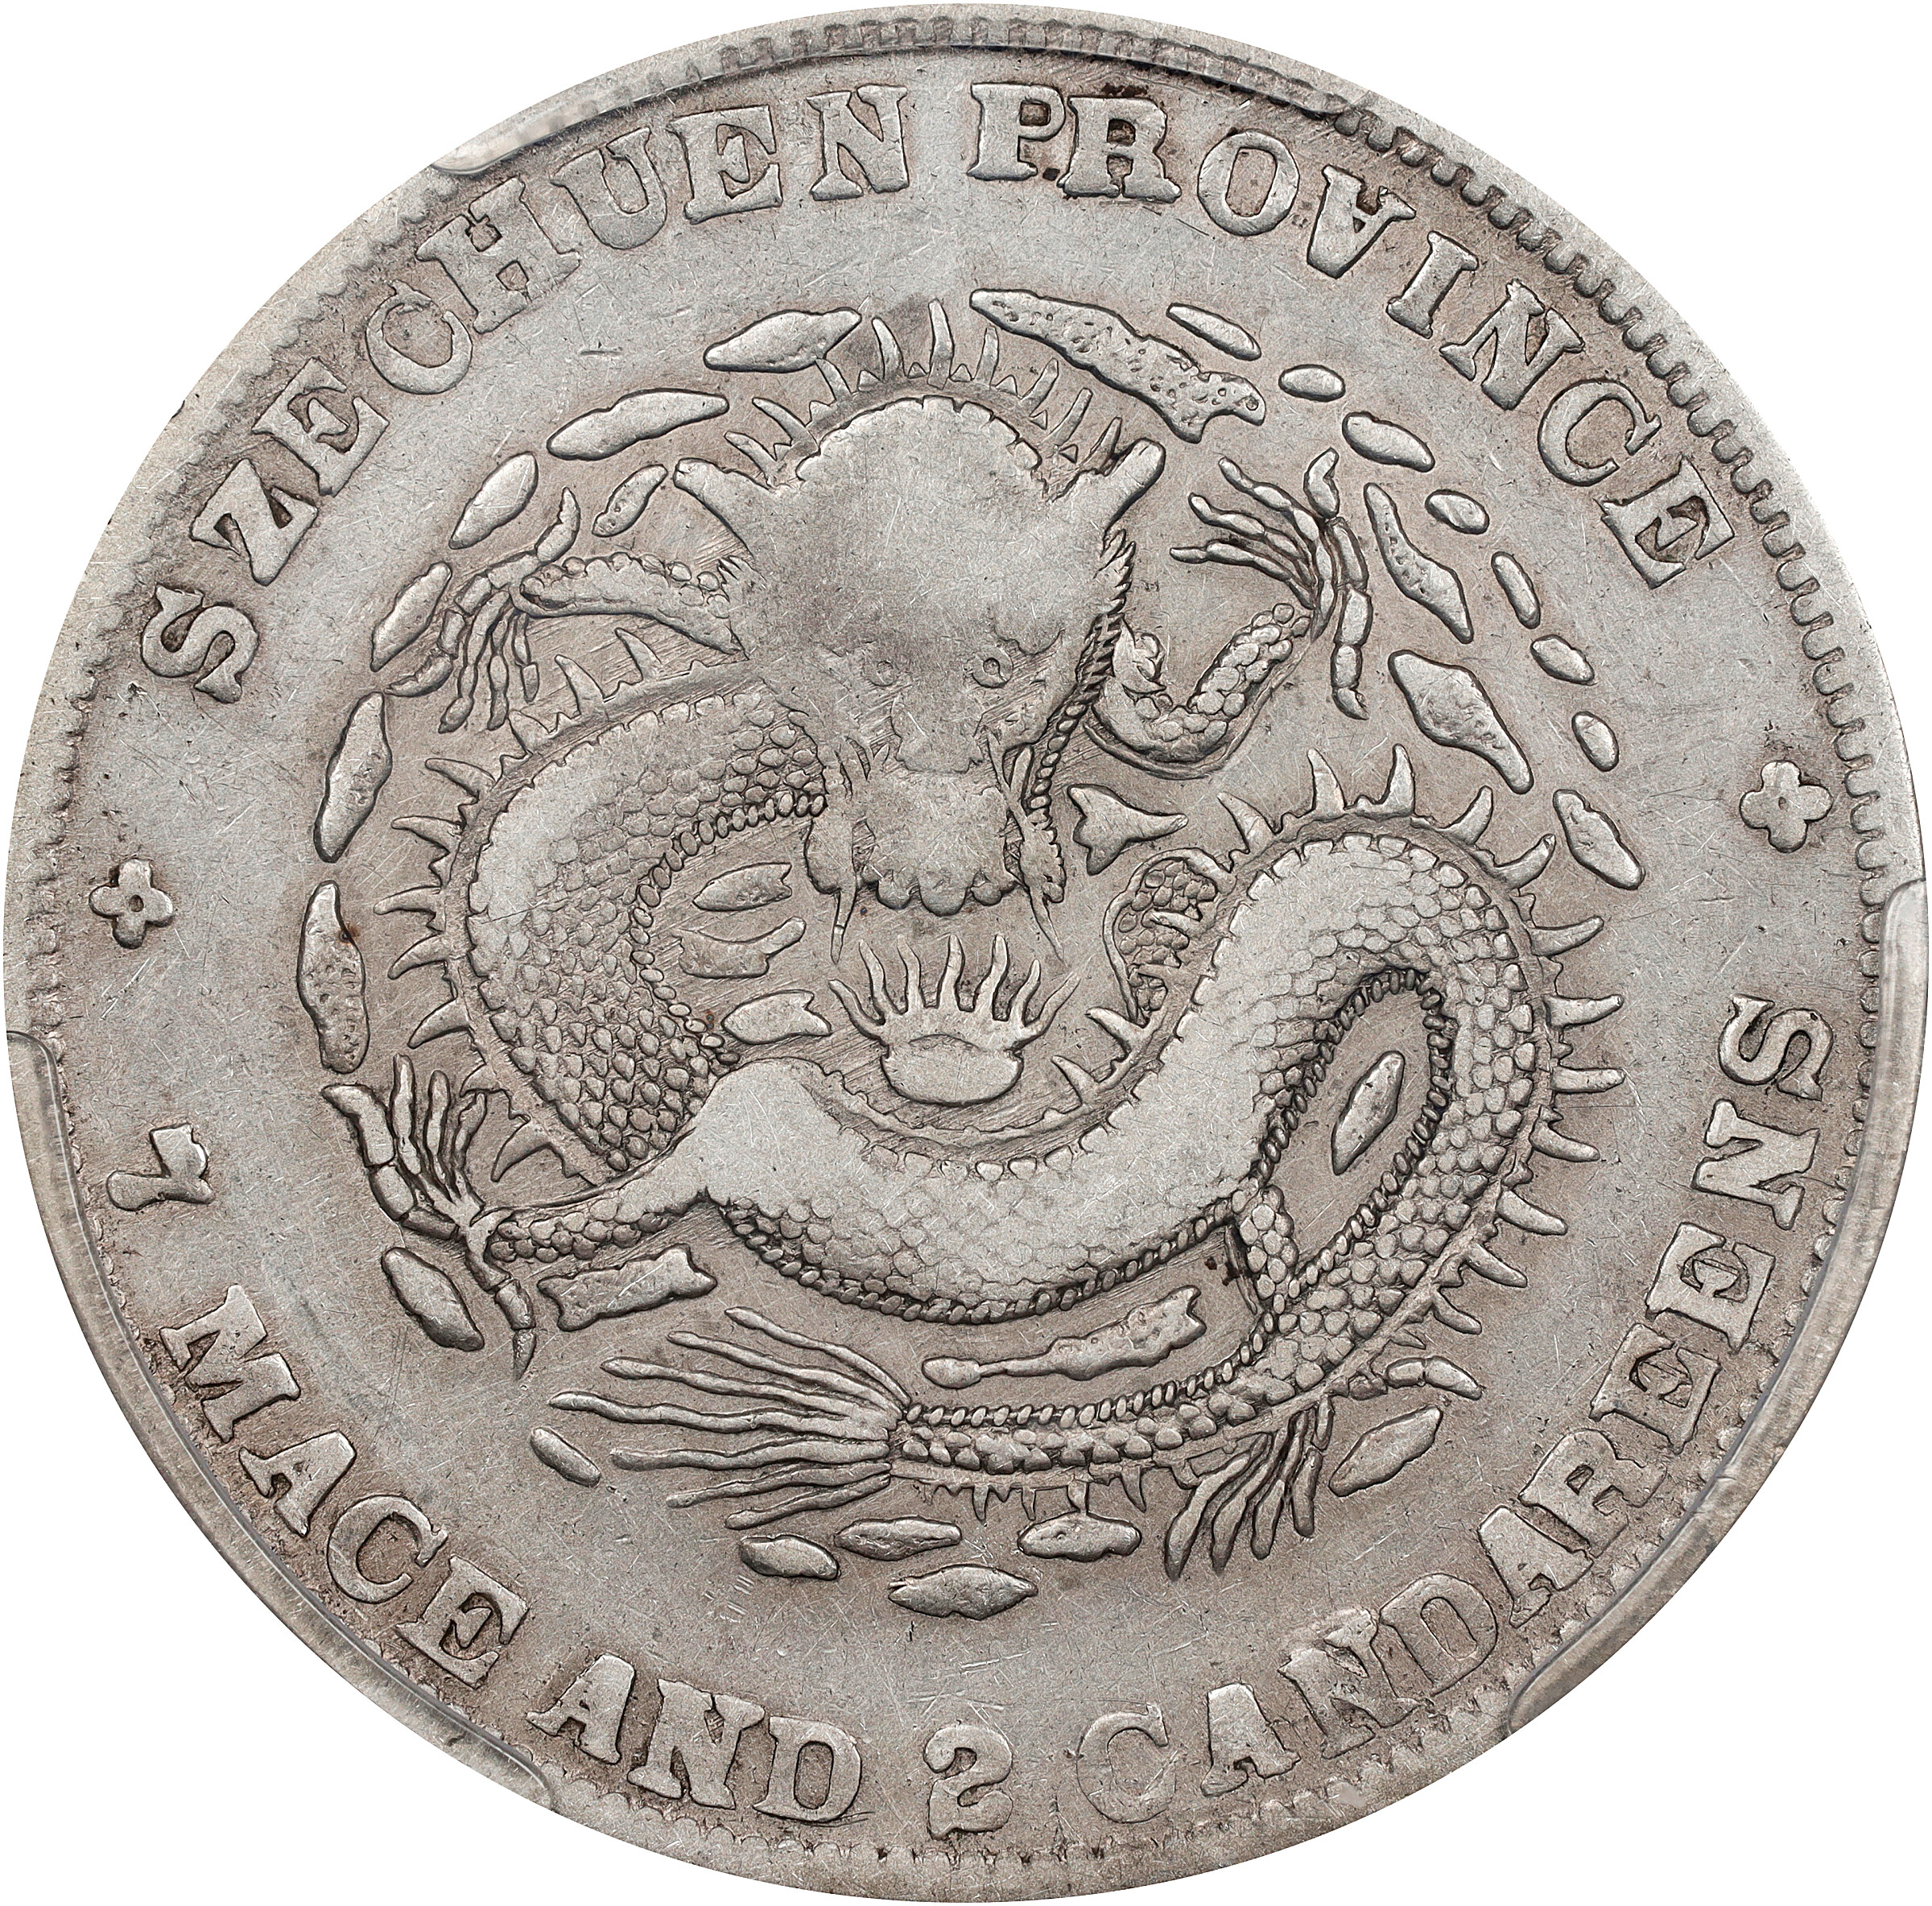 CHINA. Szechuan. 7 Mace 2 Candareens (Dollar), ND (1901-08 